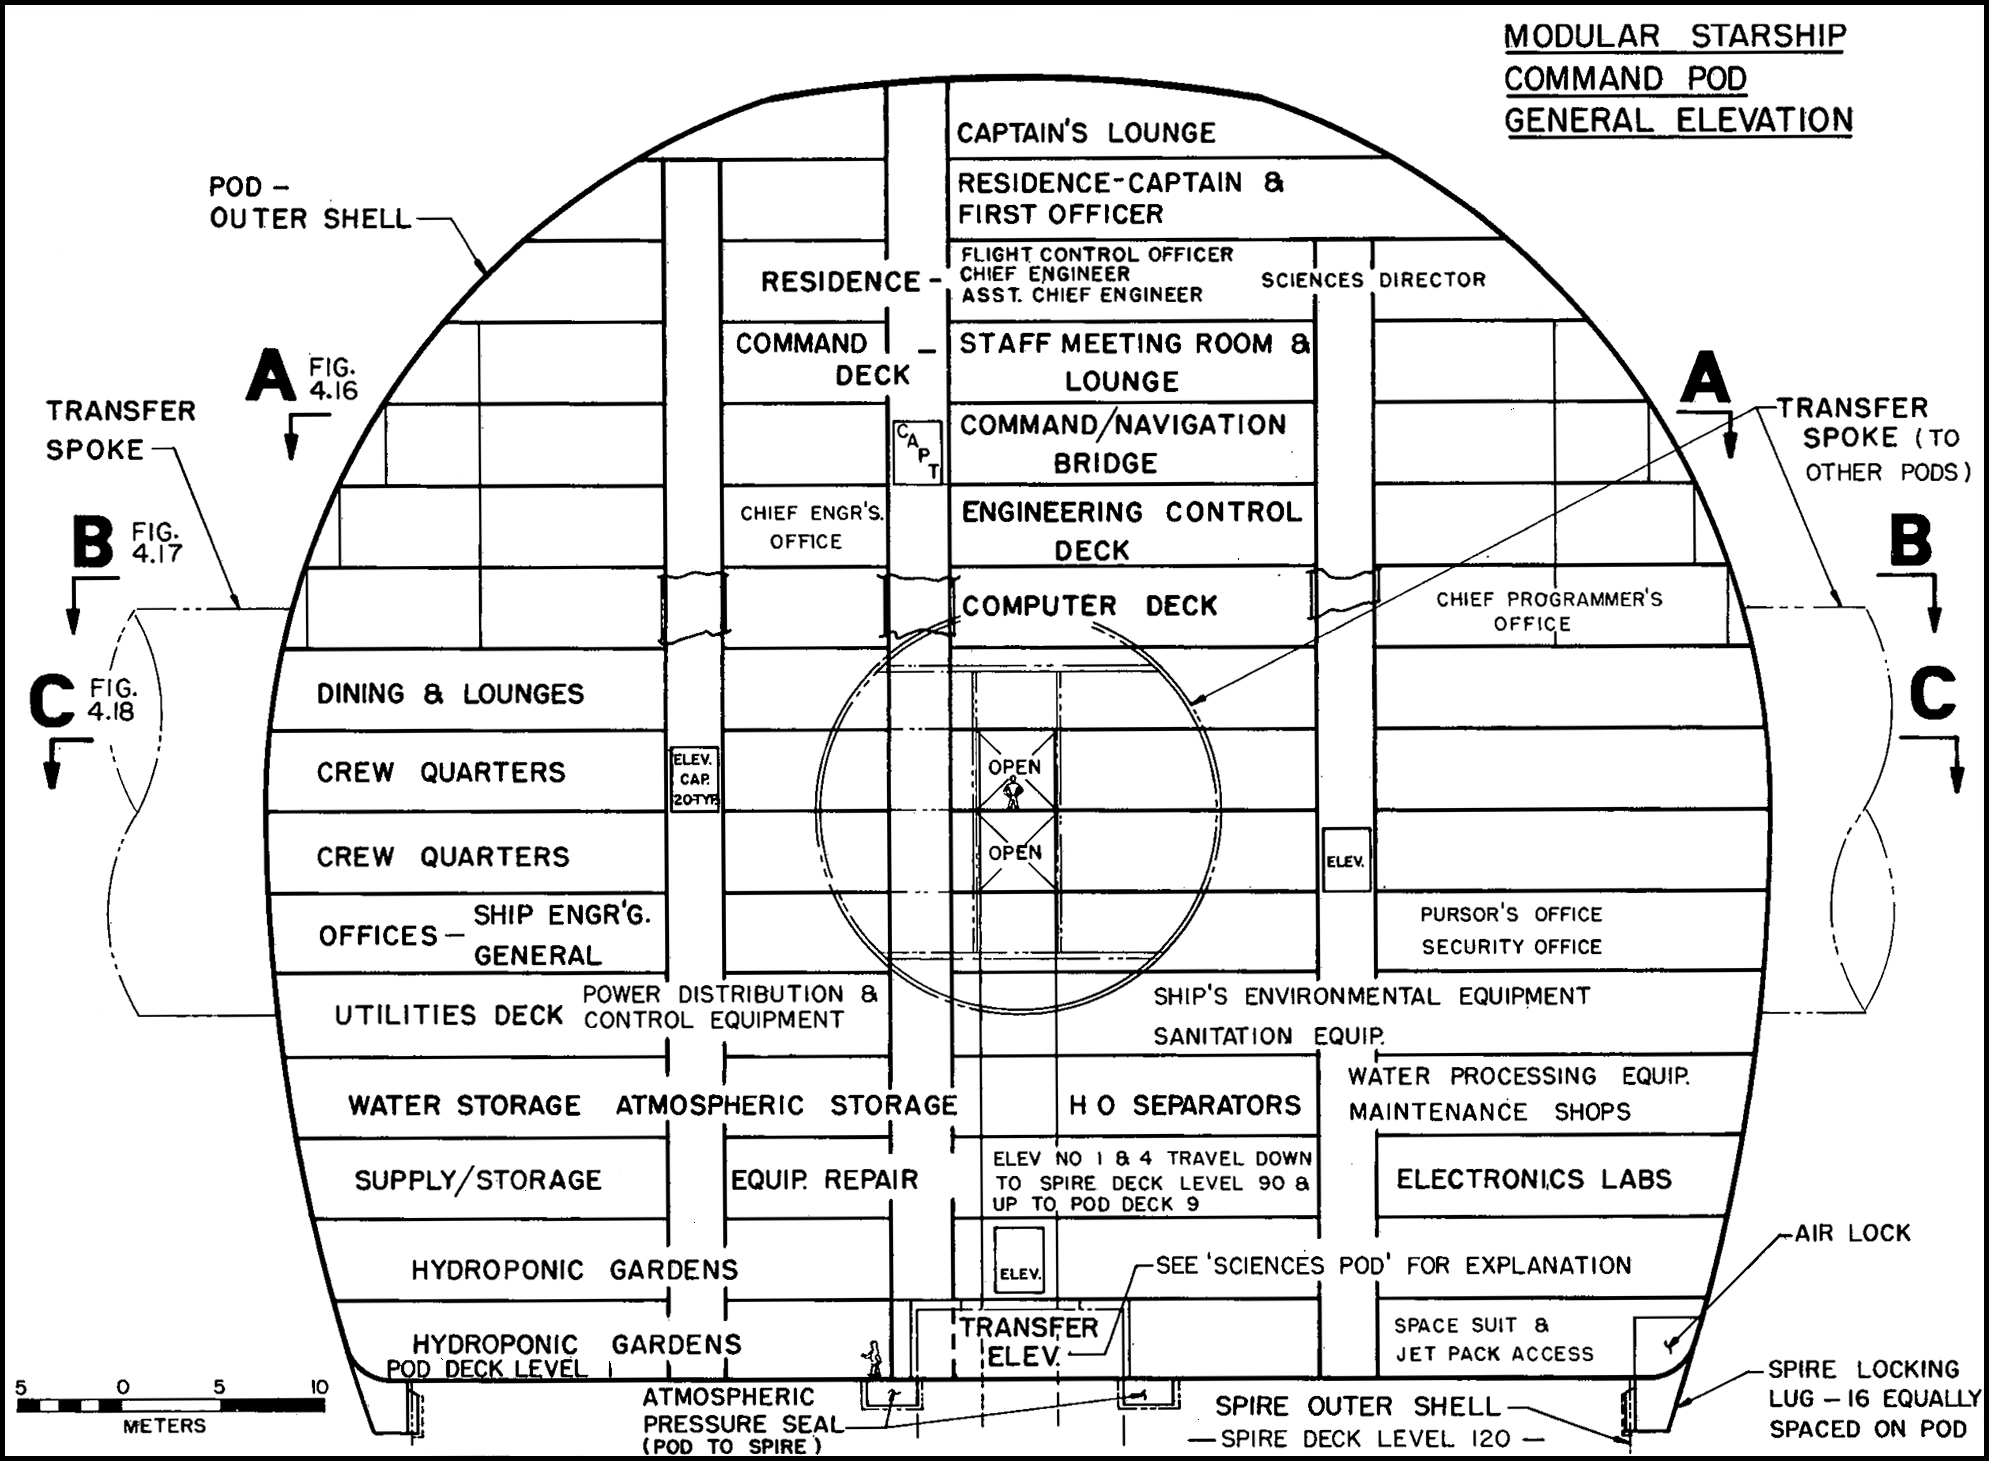 Figure 4.15 GAILE Starship Command and Navigation Pod